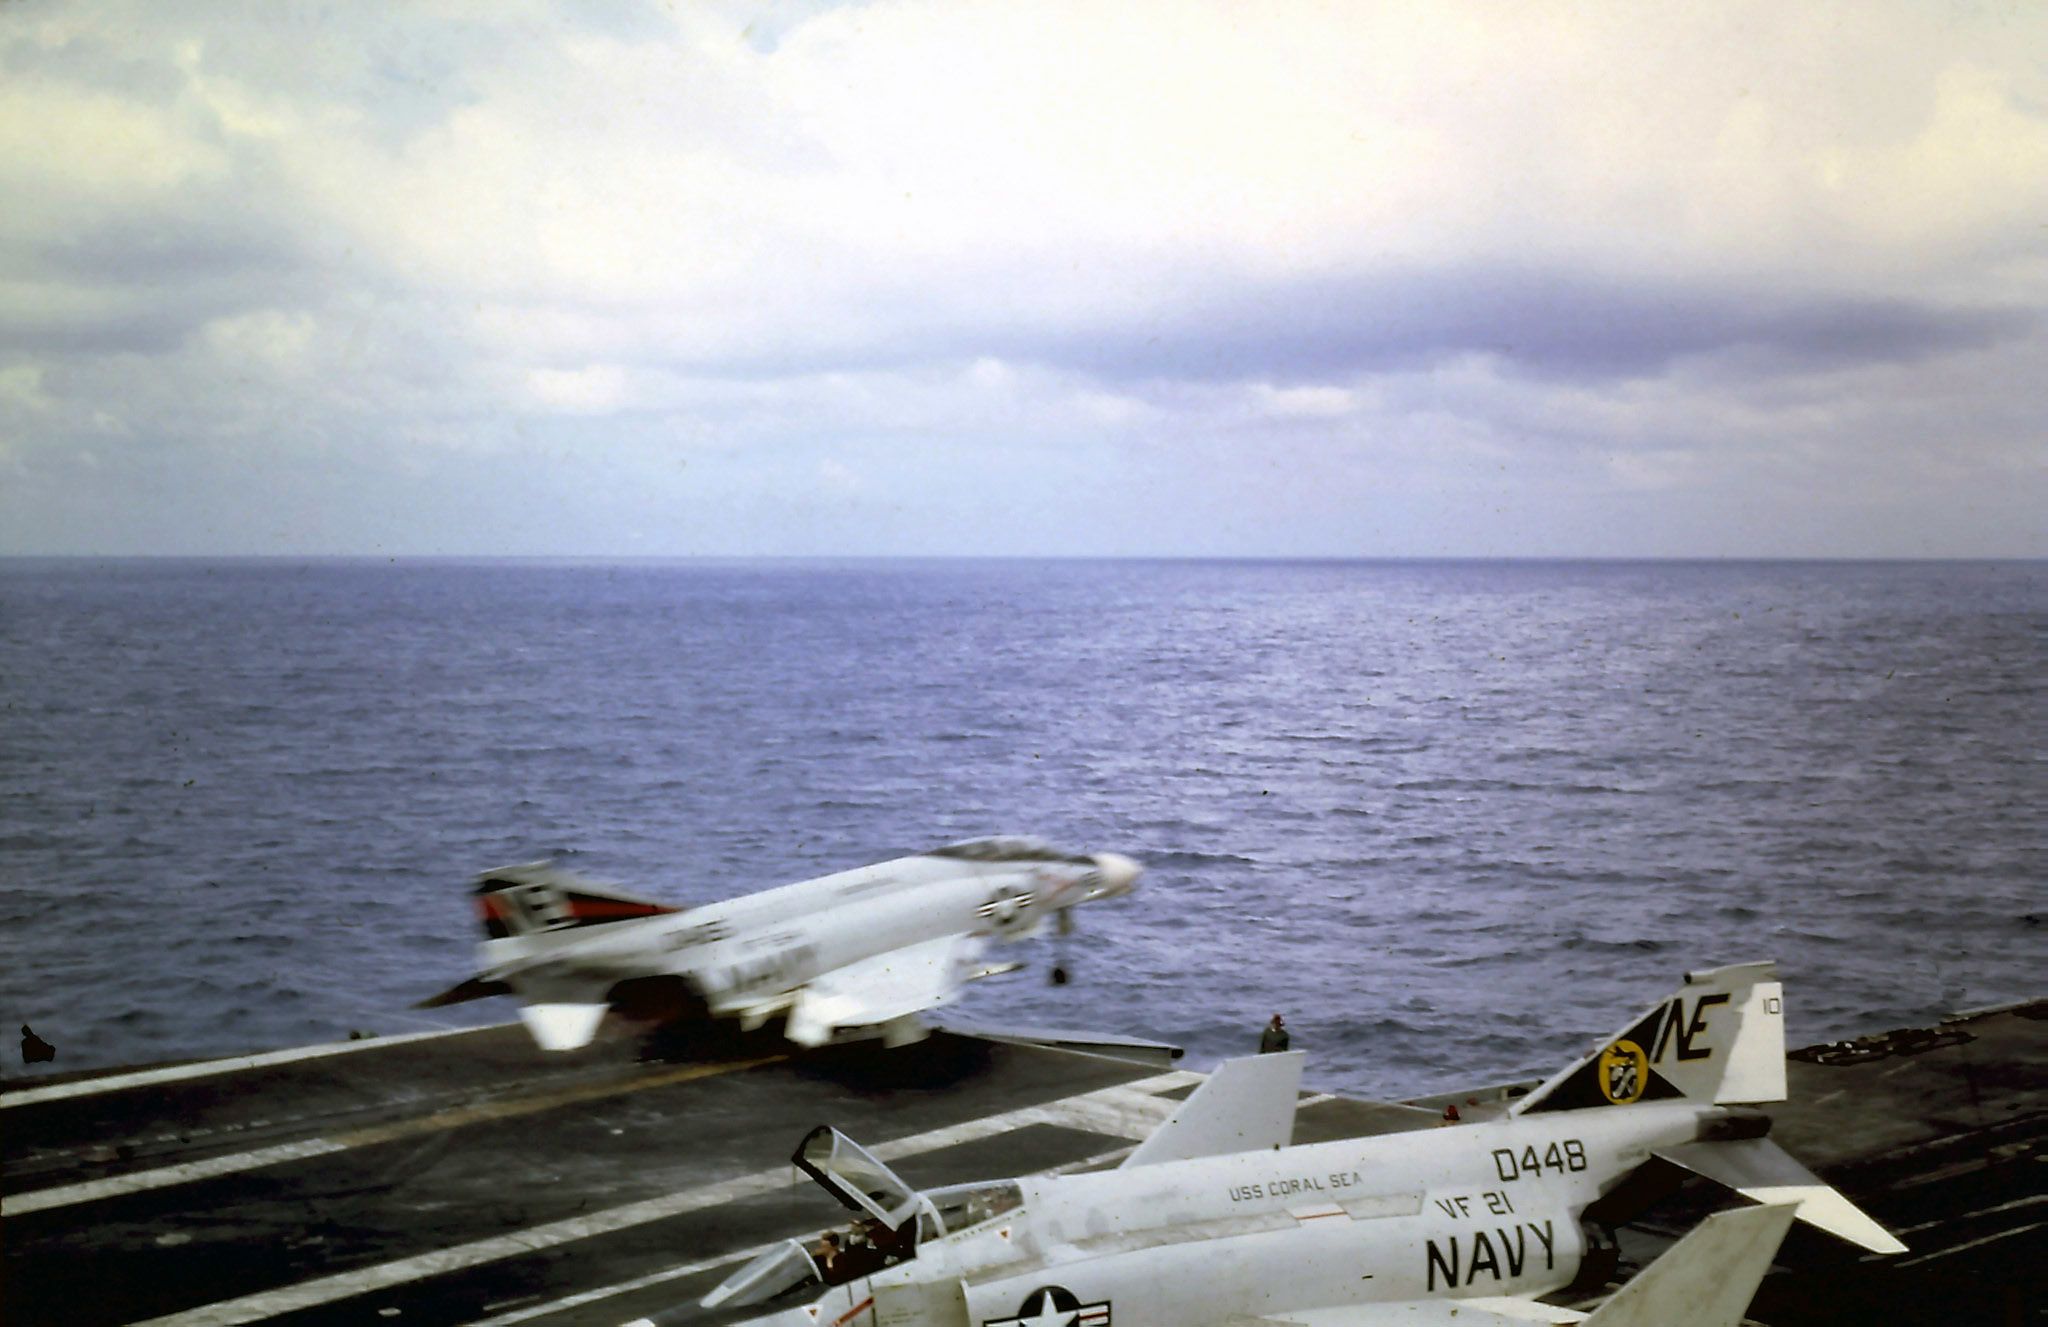 A McDonnell Douglas F-4 Phantom II taking off from an aircraft carrier.